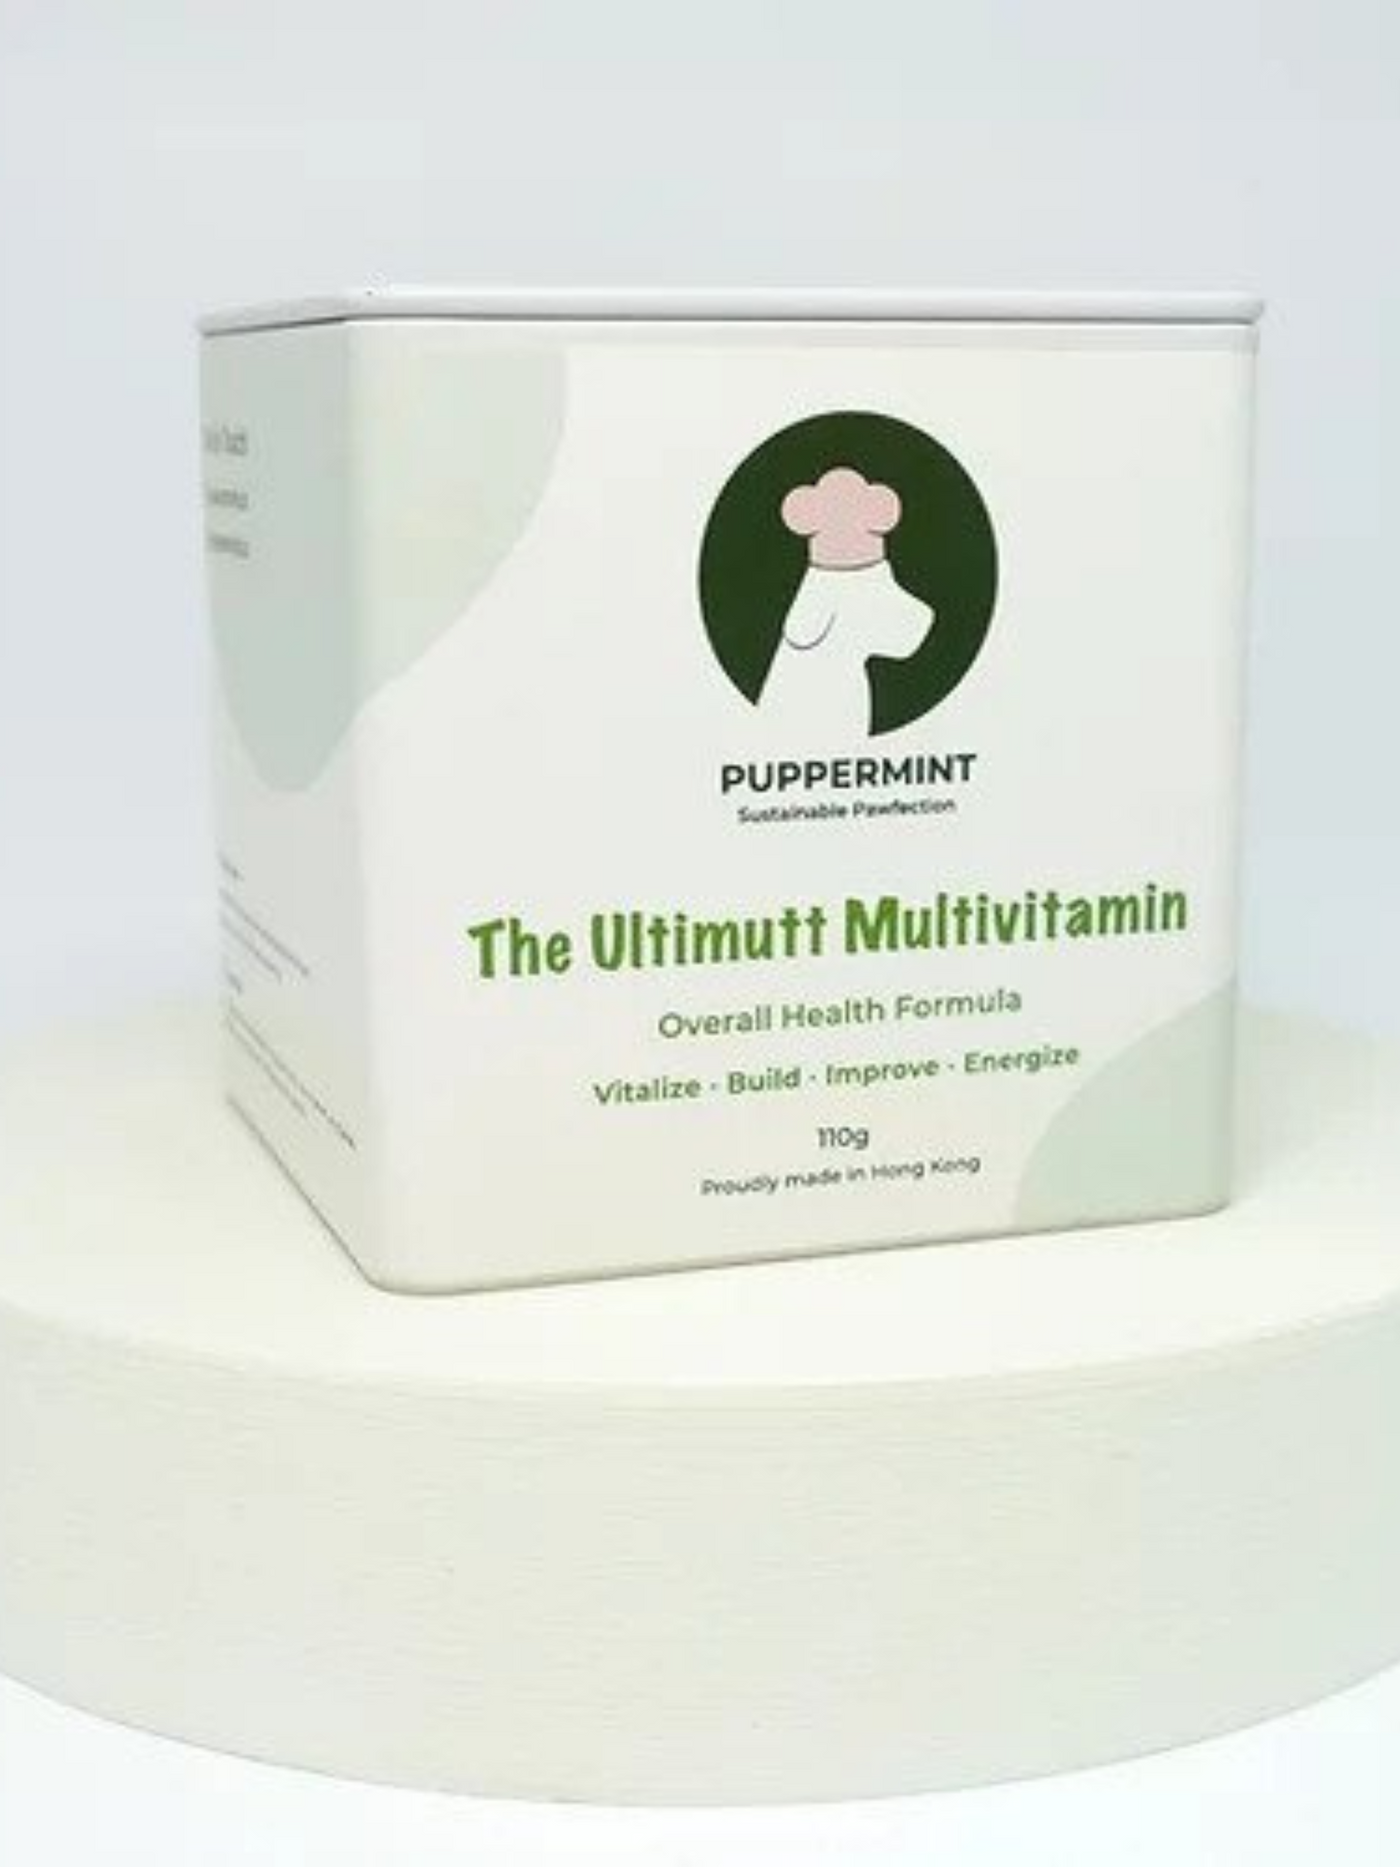 Puppermint | The Ultimutt Multivitamin 多種維他命專用配方（狗狗專用）